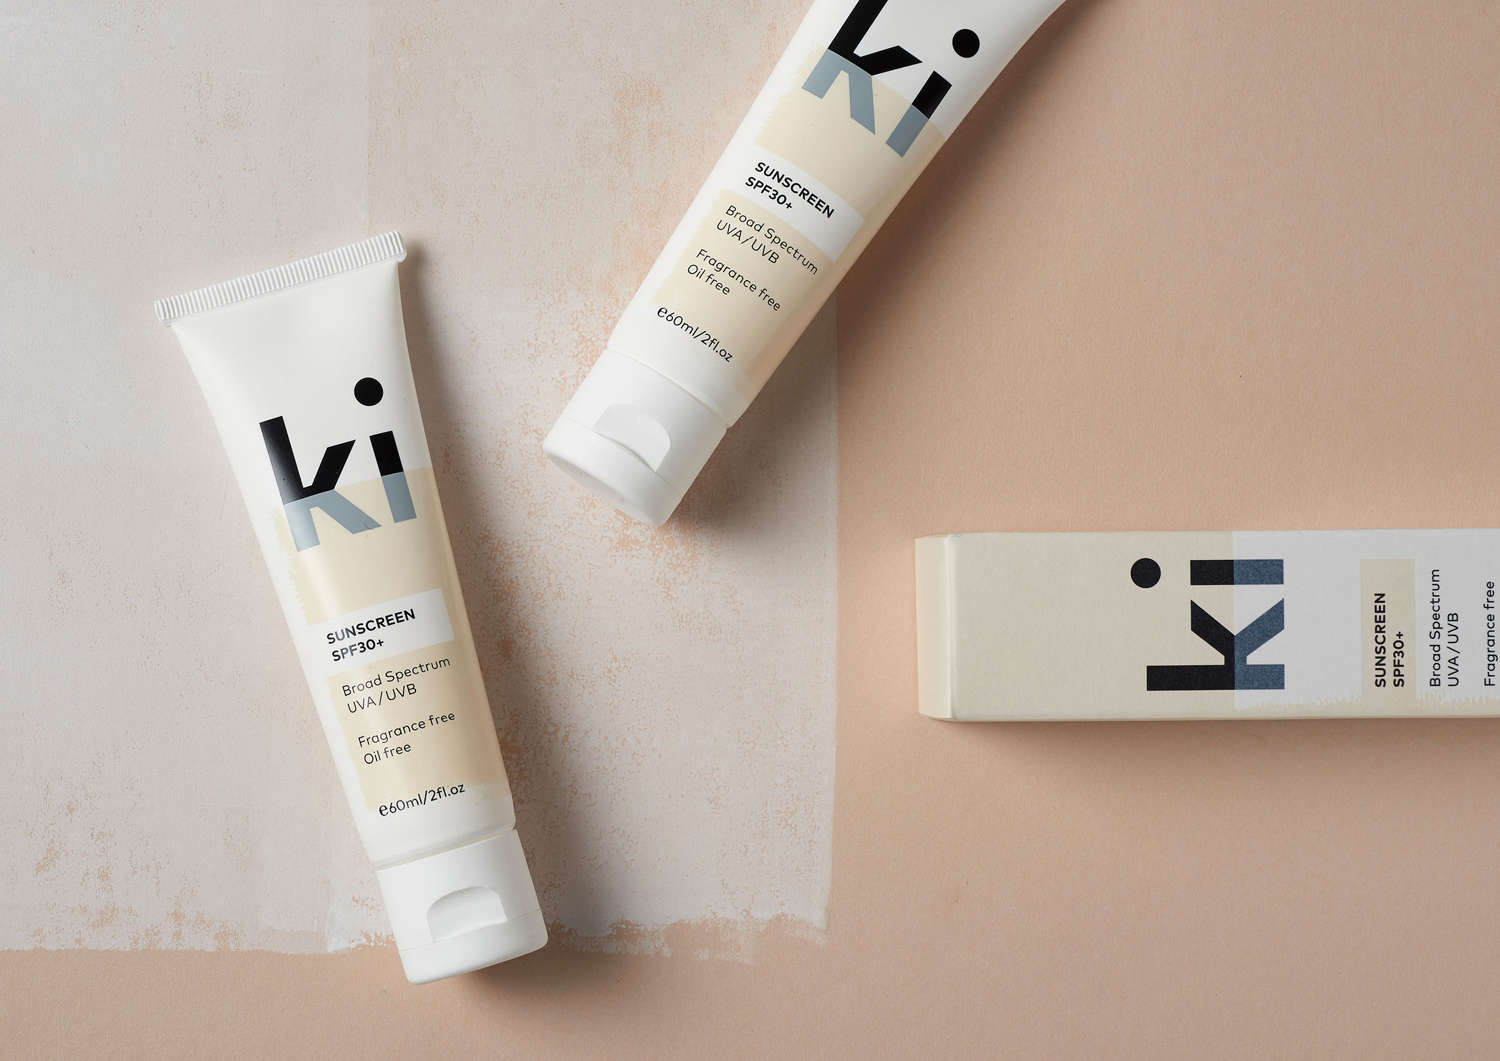 Minimal Cosmetic Packaging Design – Ki Sunscreen by Akin, New Zealand